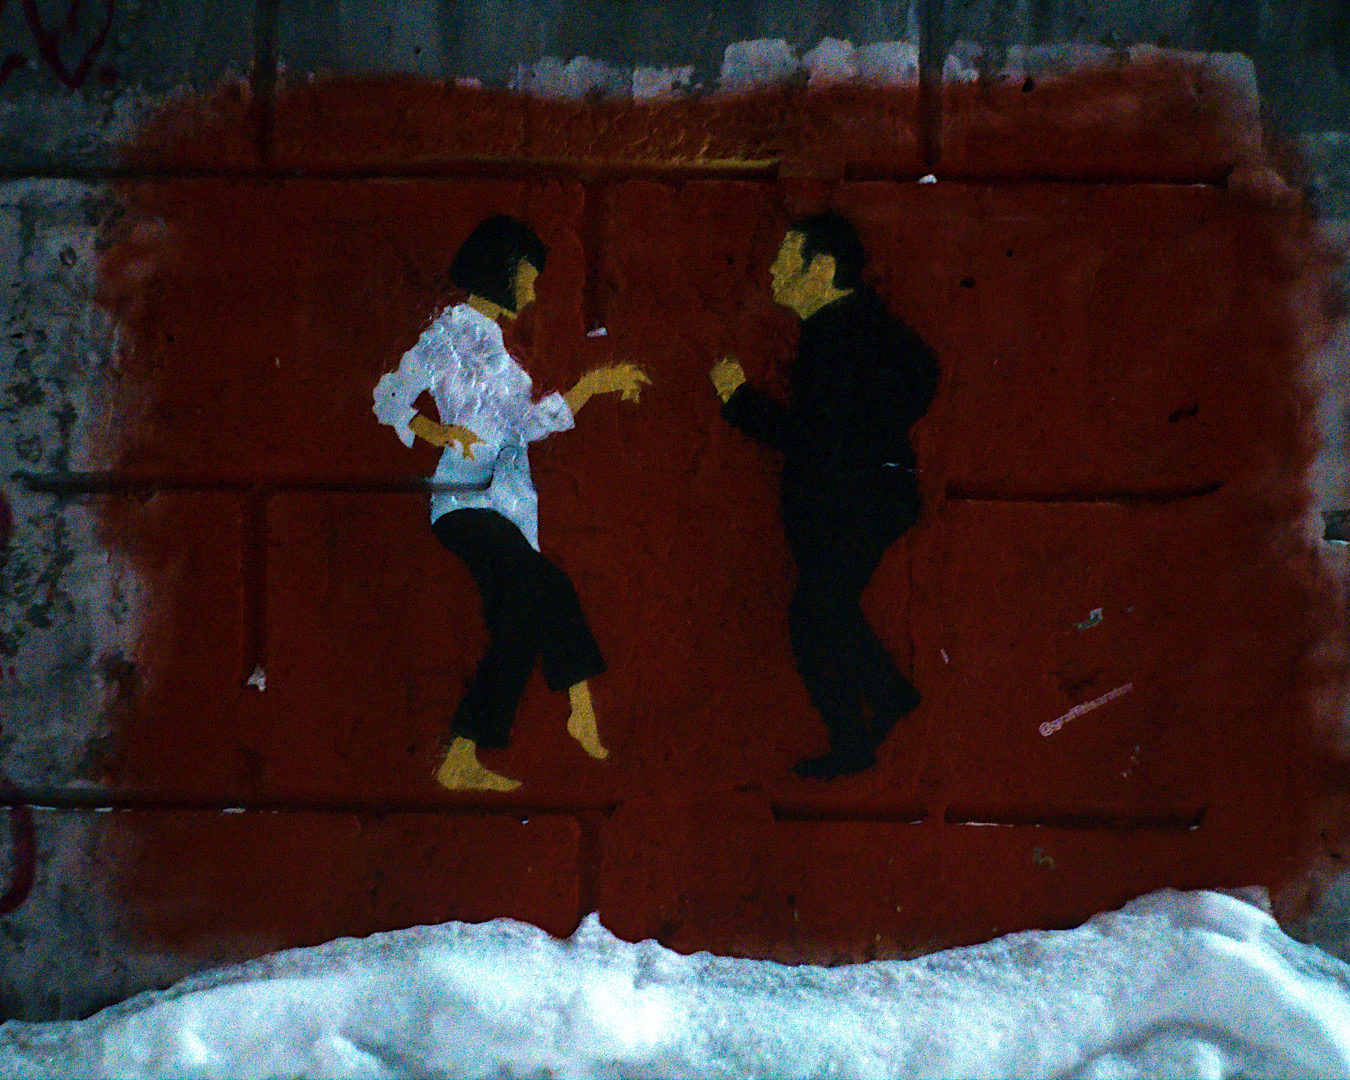 John Travolta and Uma Thurman dance from Pulp Fiction depicted in a minimalist graffiti